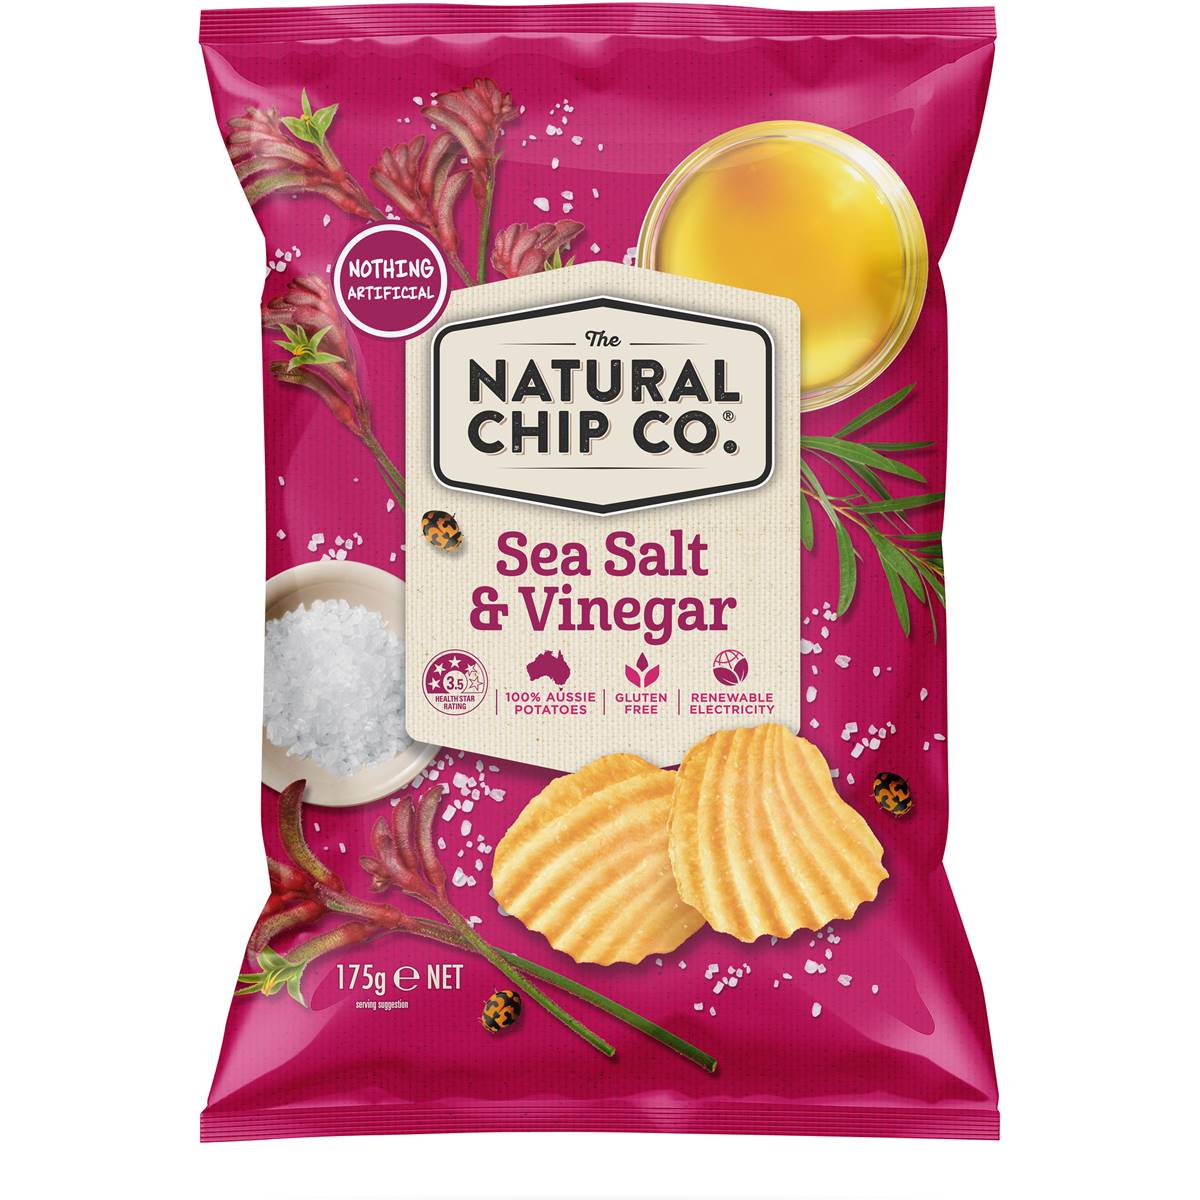 The Natural Chip Co. Sea Salt & Vinegar 175g